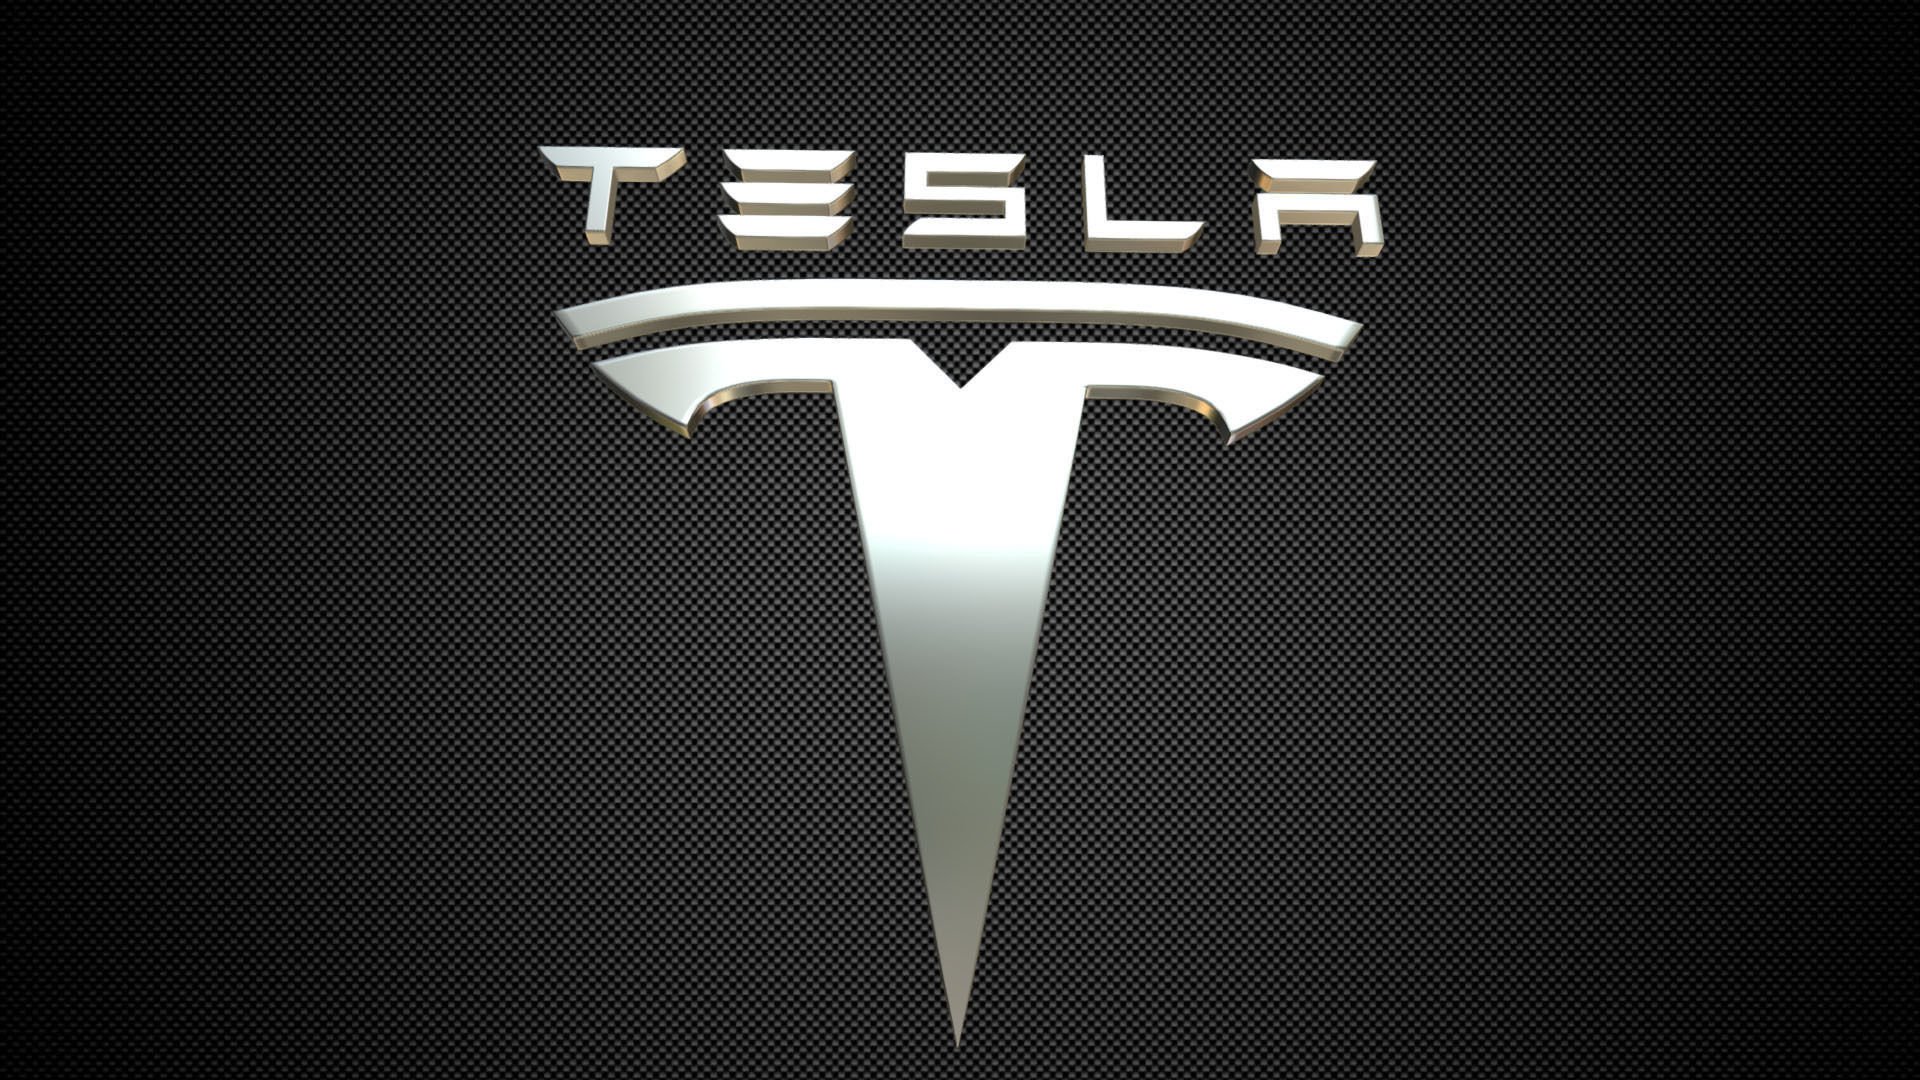 Tesla Logo Widescreen Wallpapers.